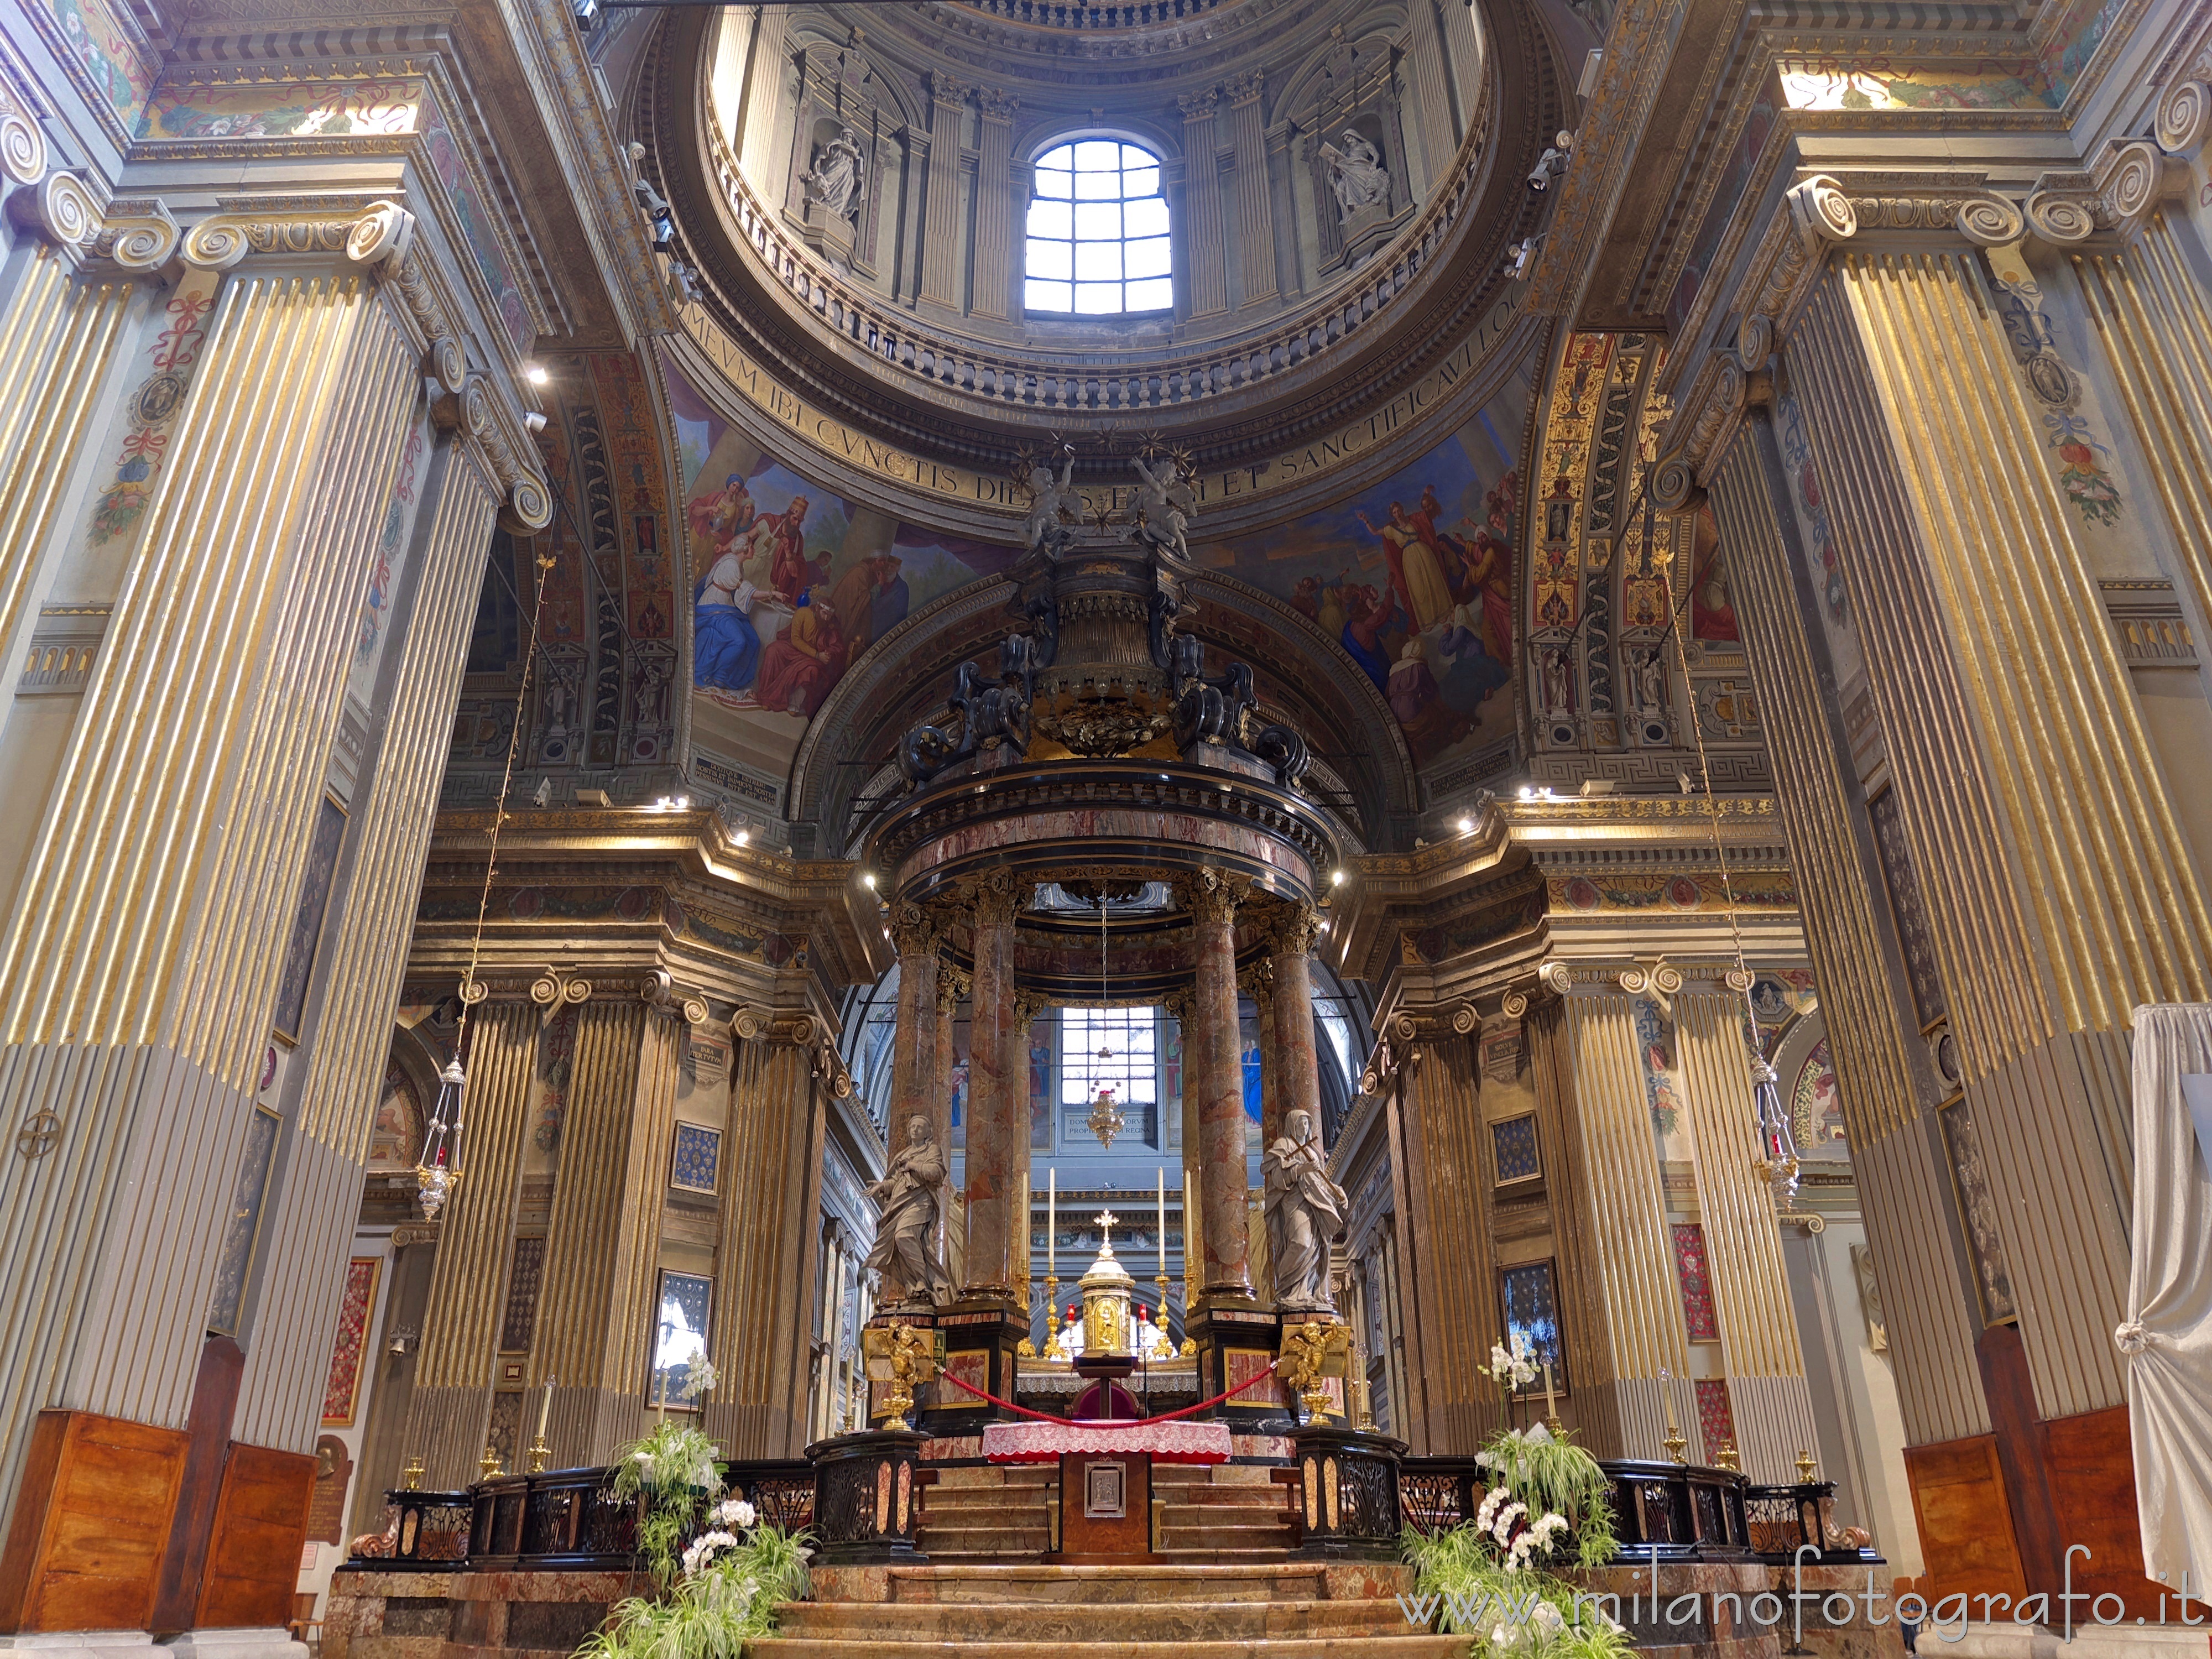 Caravaggio (Bergamo, Italy): Main altar of the church of the Sanctuary of Caravaggio - Caravaggio (Bergamo, Italy)